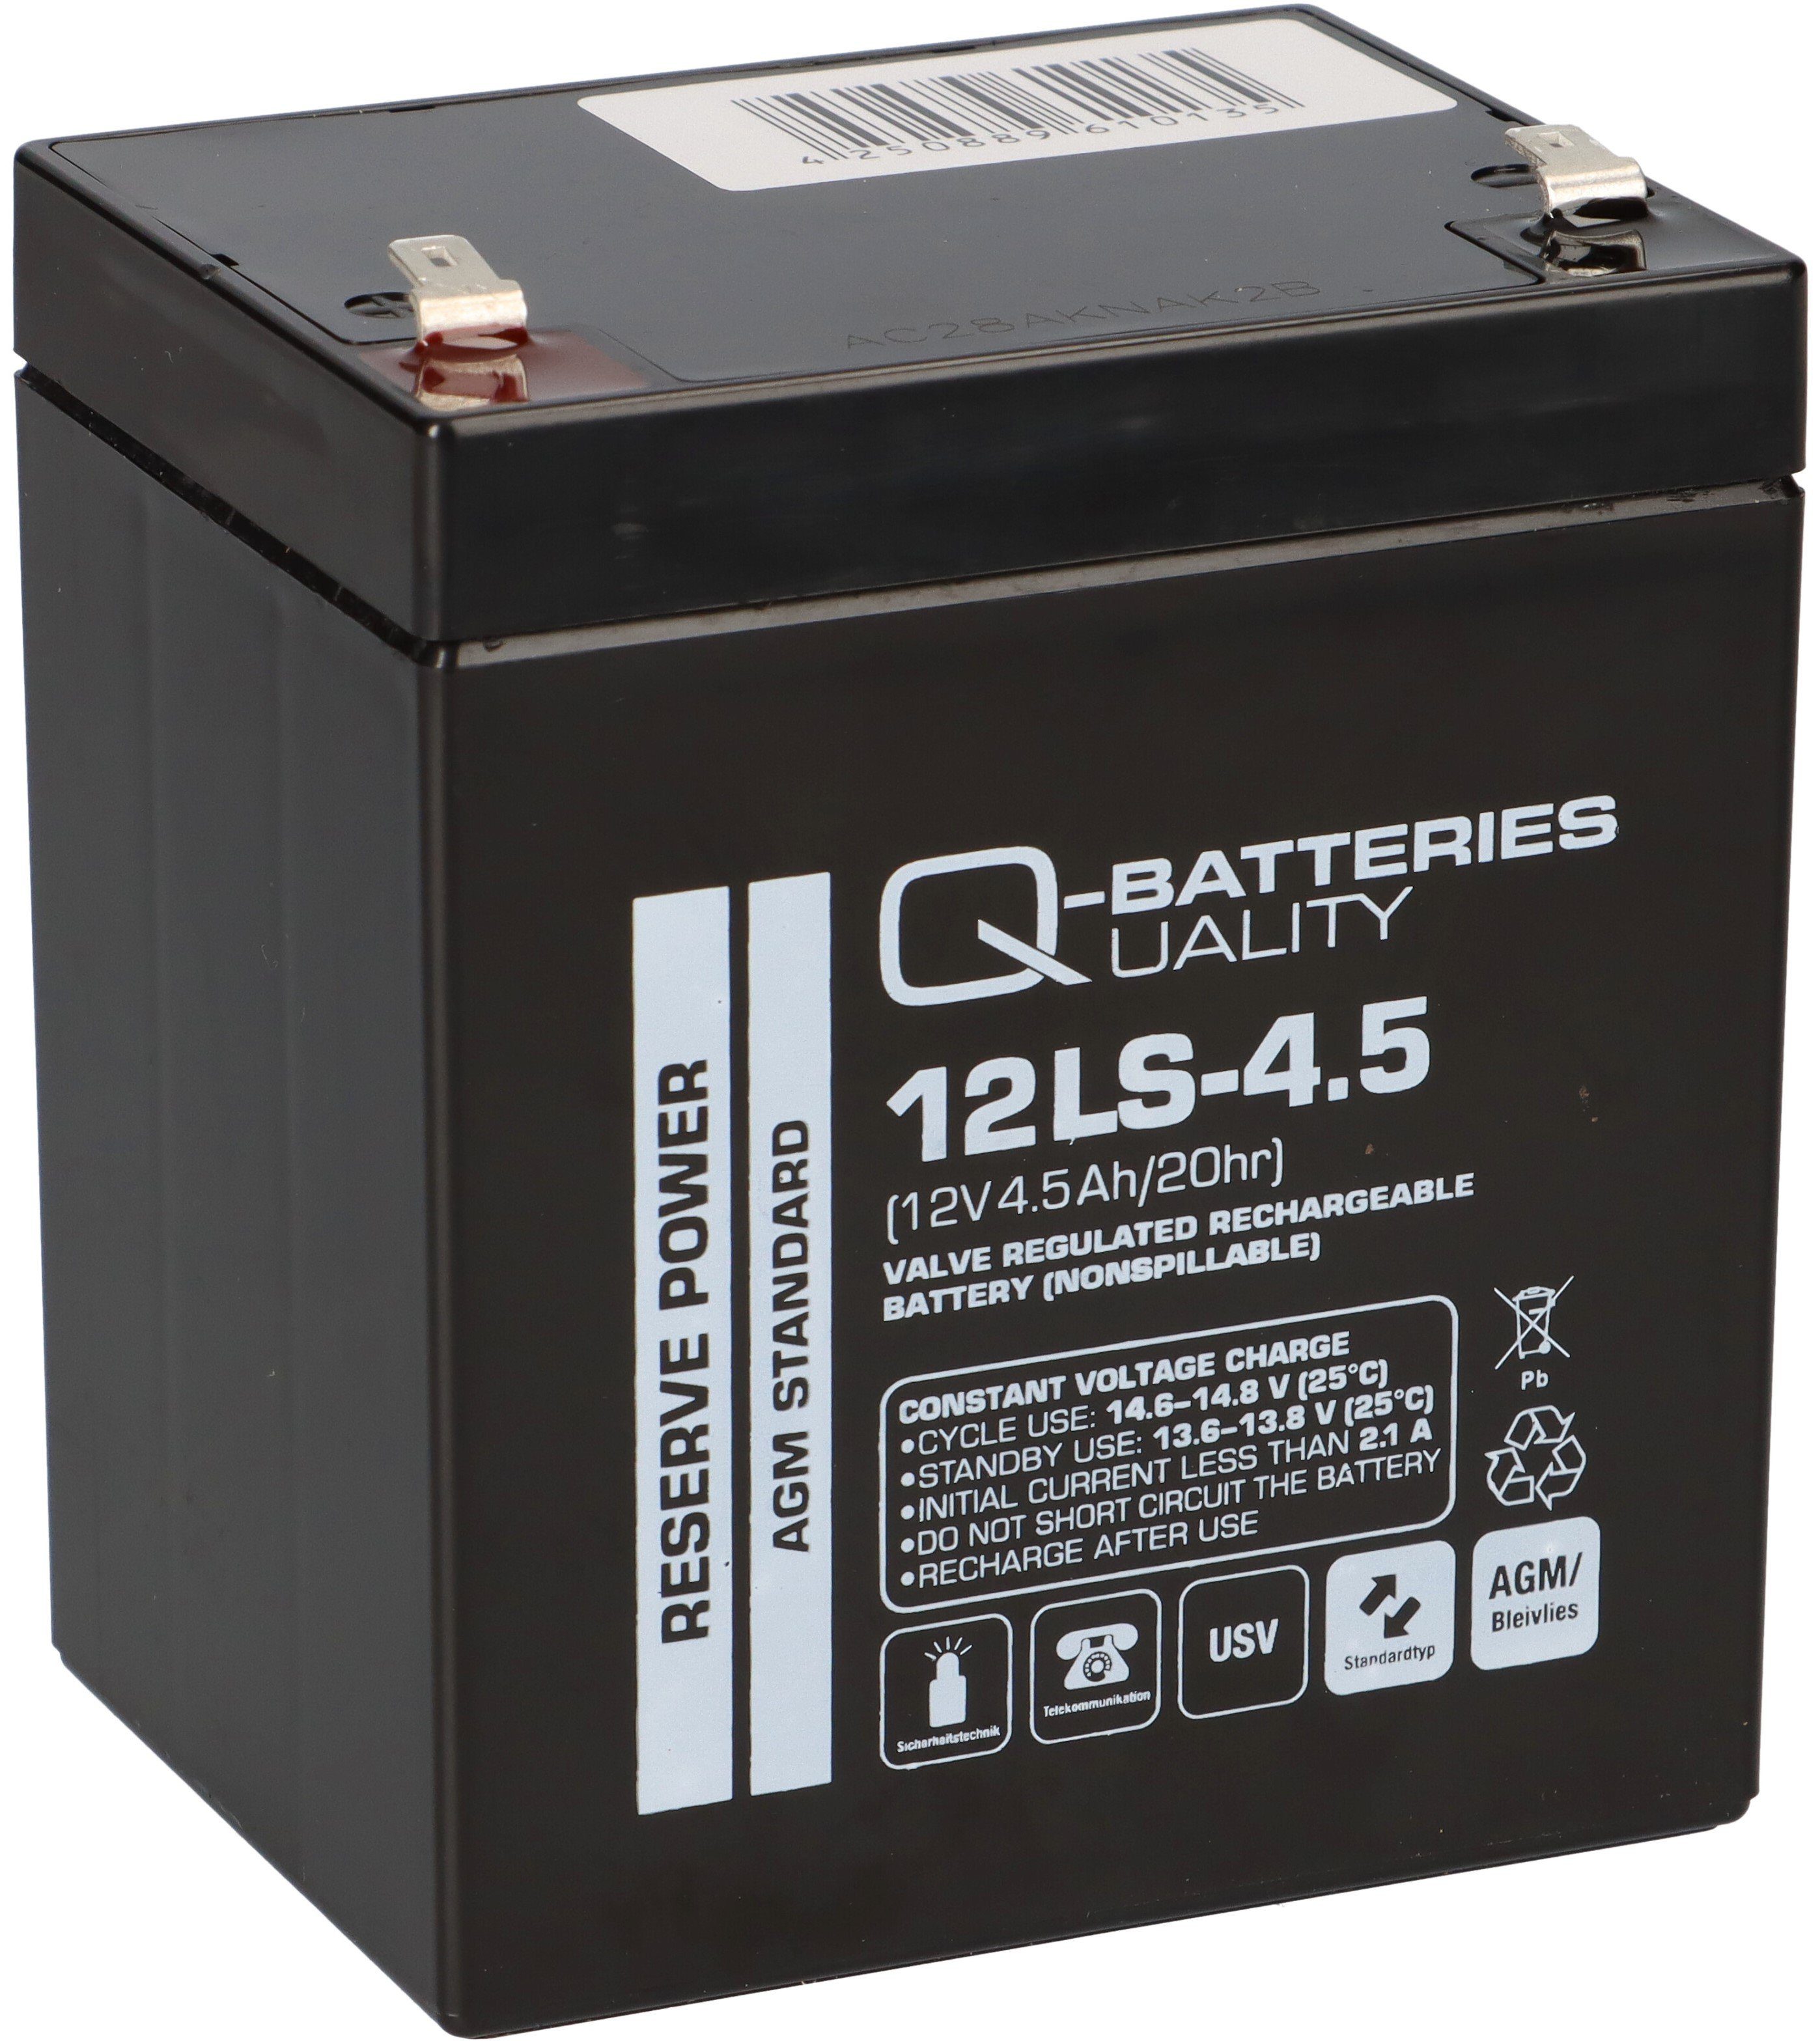 Akku Q-Batteries Blei-Vlies 4,5Ah 12V VRLA 12LS-4.5 AGM Bleiakkus / Q-Batteries